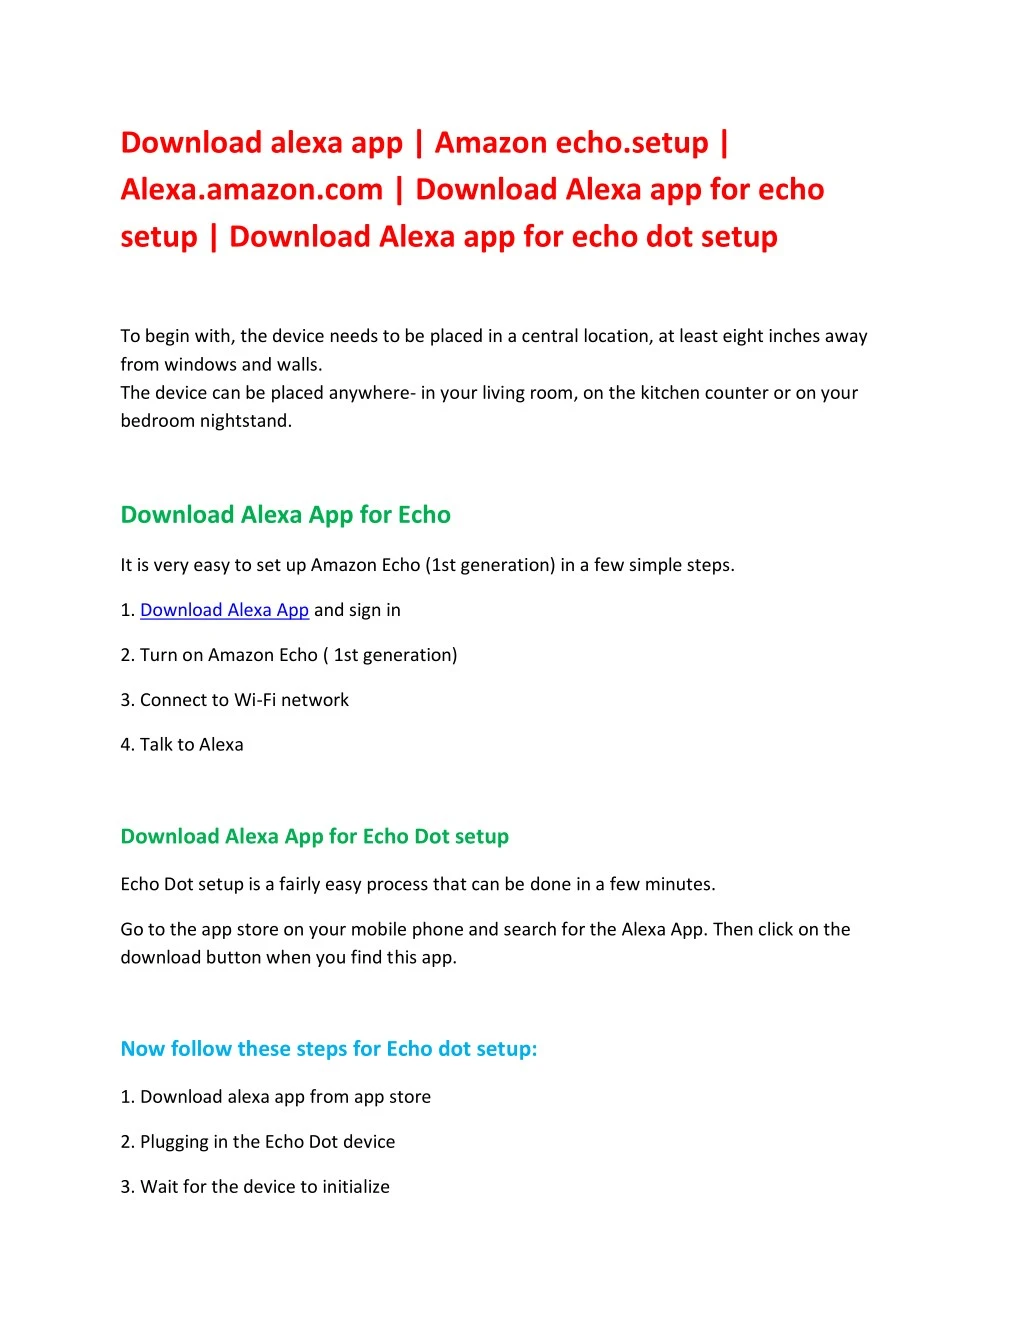 download alexa app amazon echo setup alexa amazon